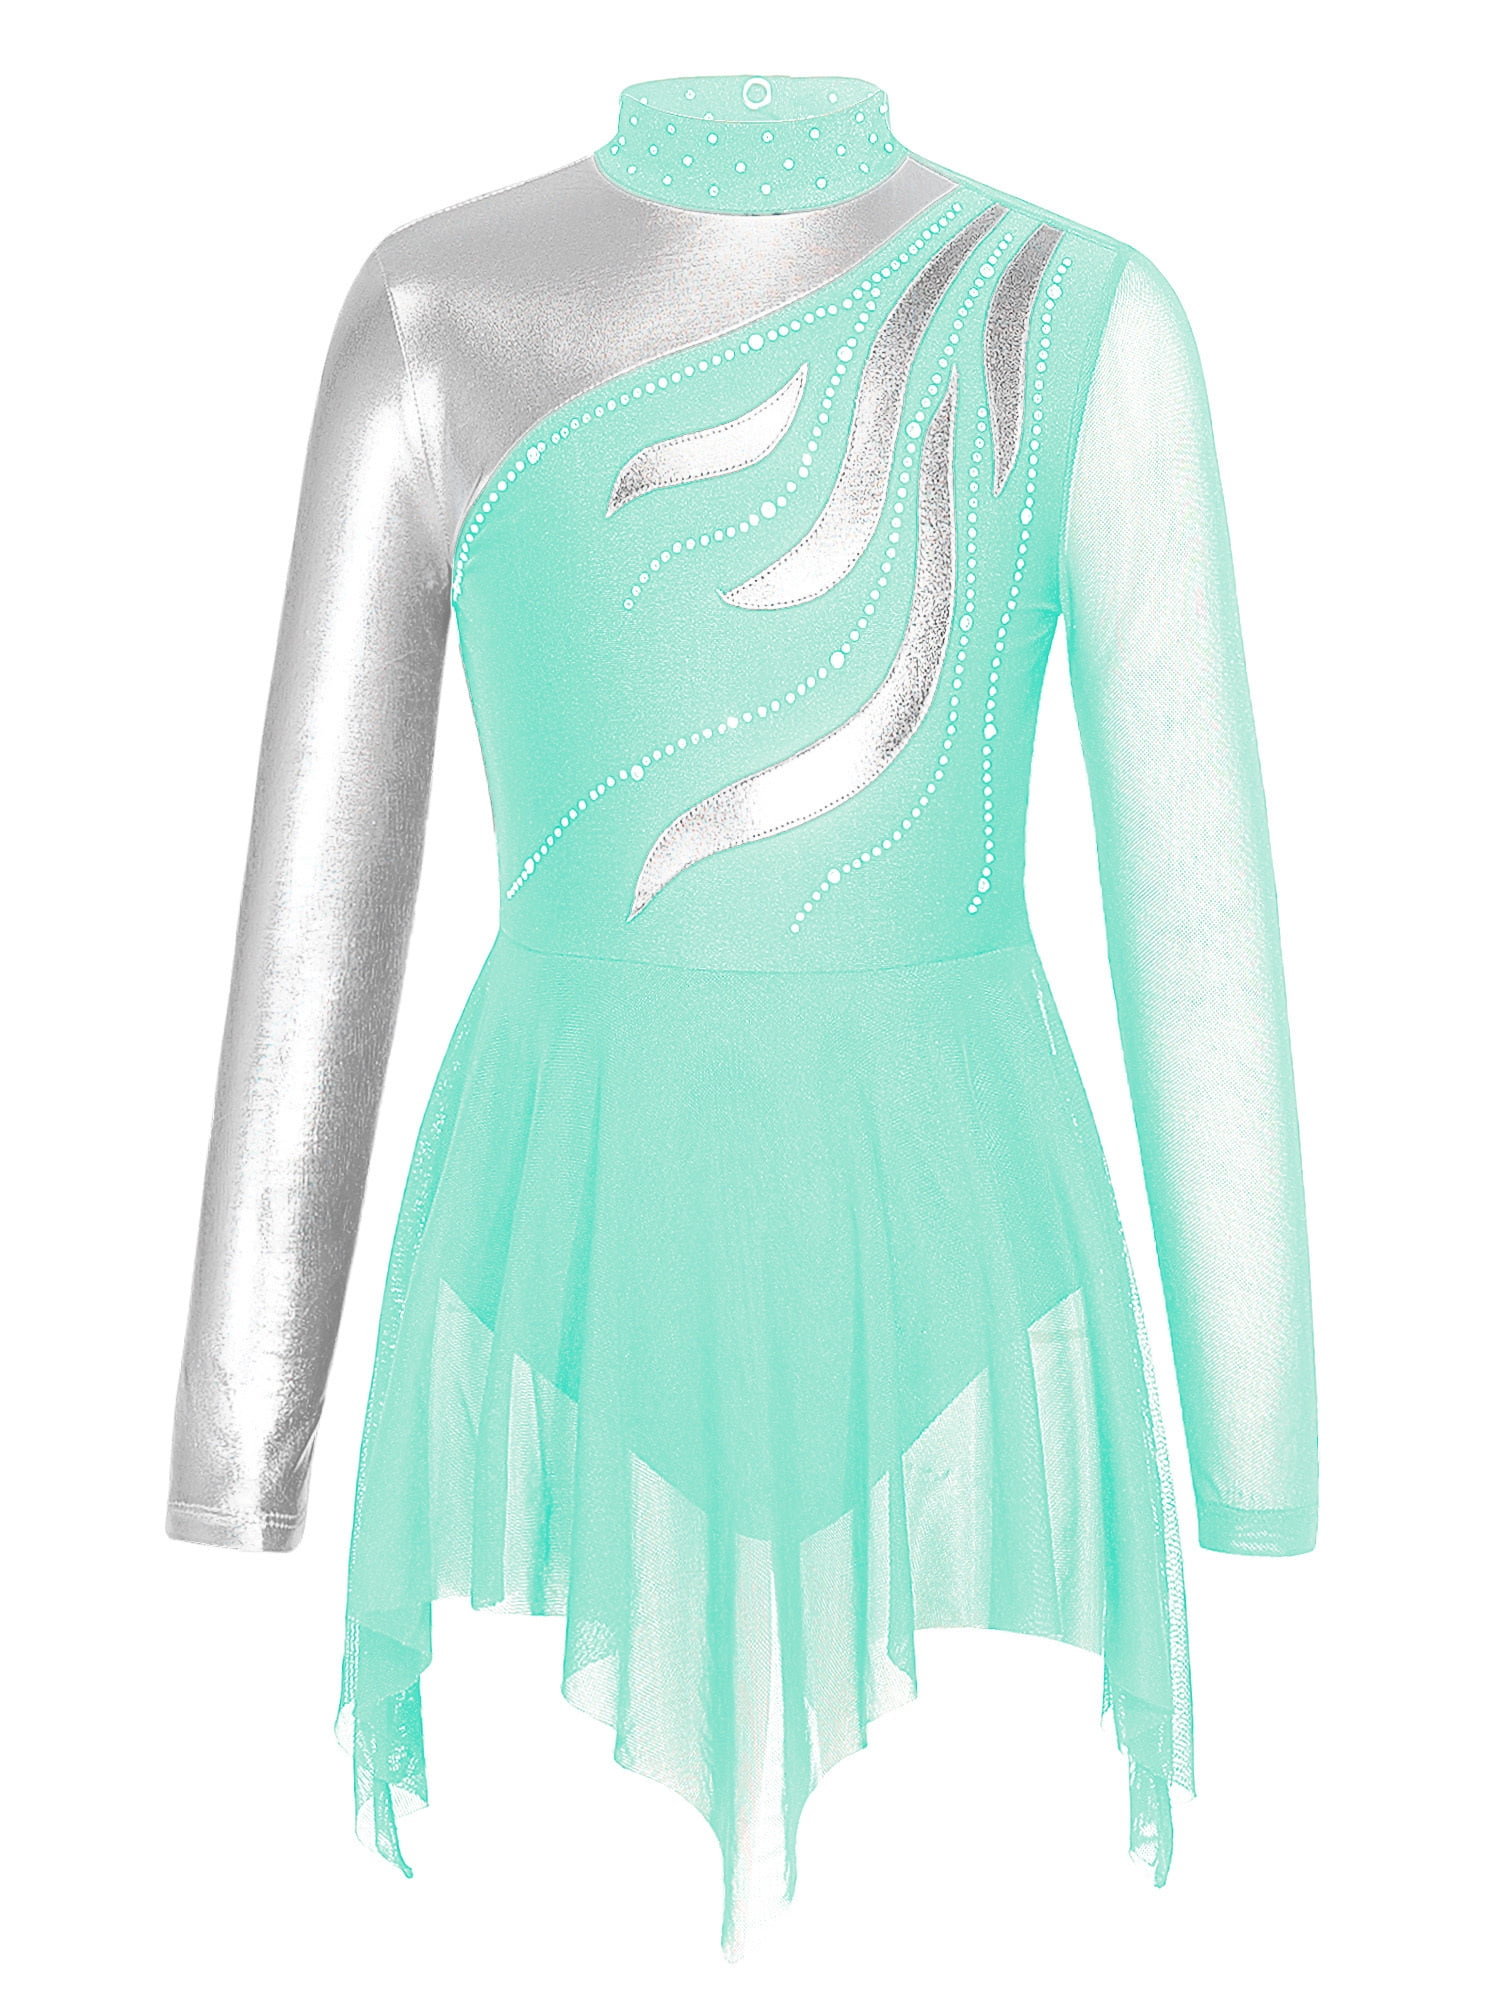 YiZYiF Kids Girls Shiny Rhinestones Dance Costume Stand Collar Long ...